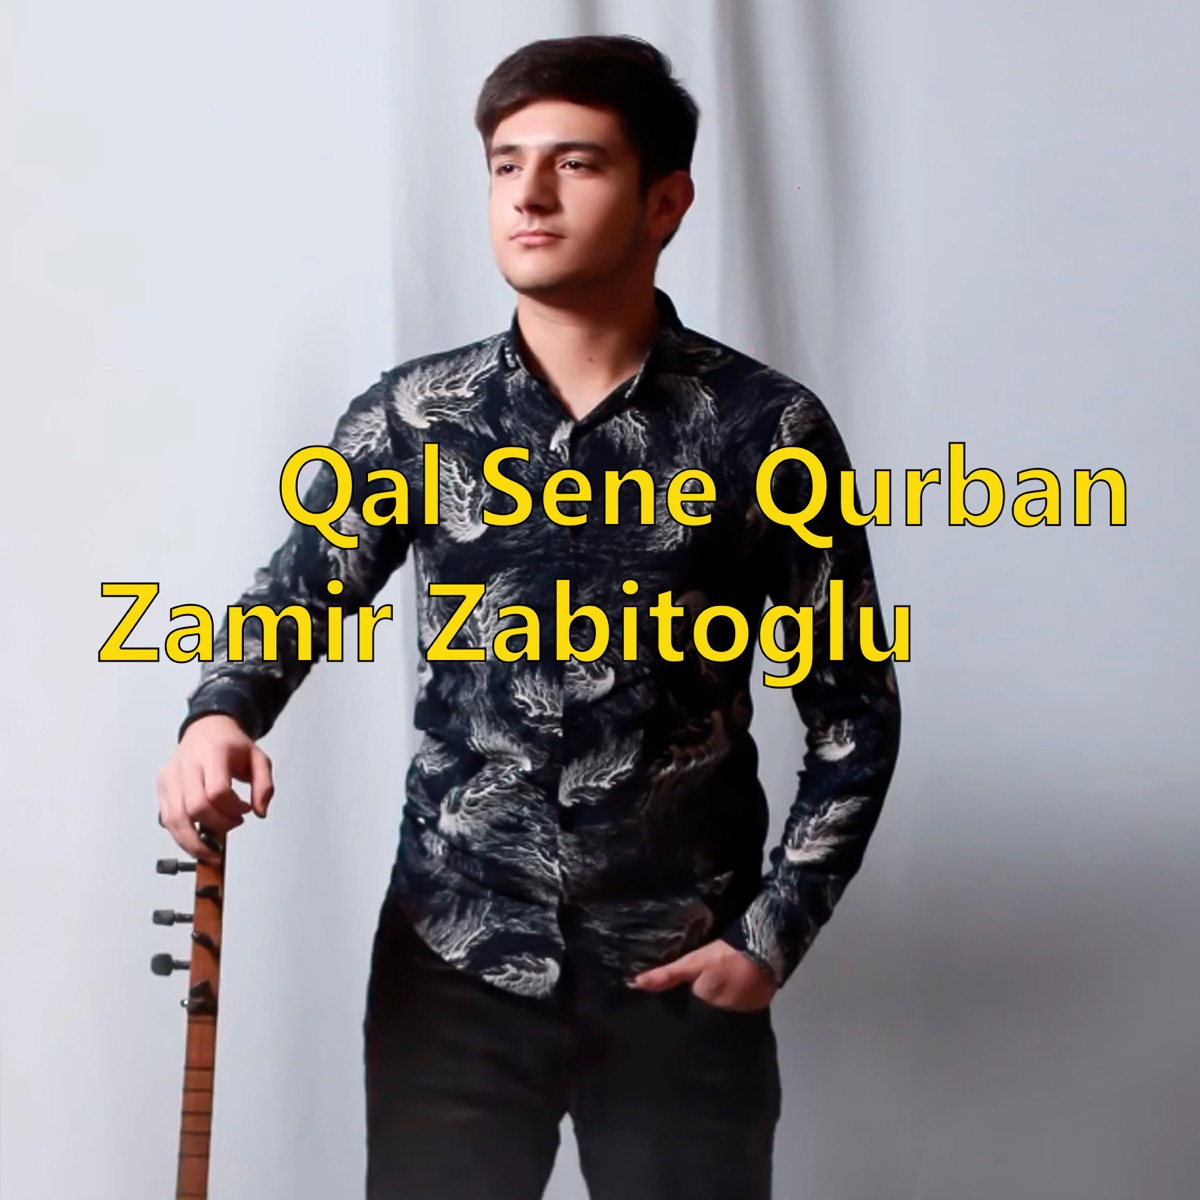 Qal Sene Qurban - Single - Album by Zamir Zabitoglu - Apple Music